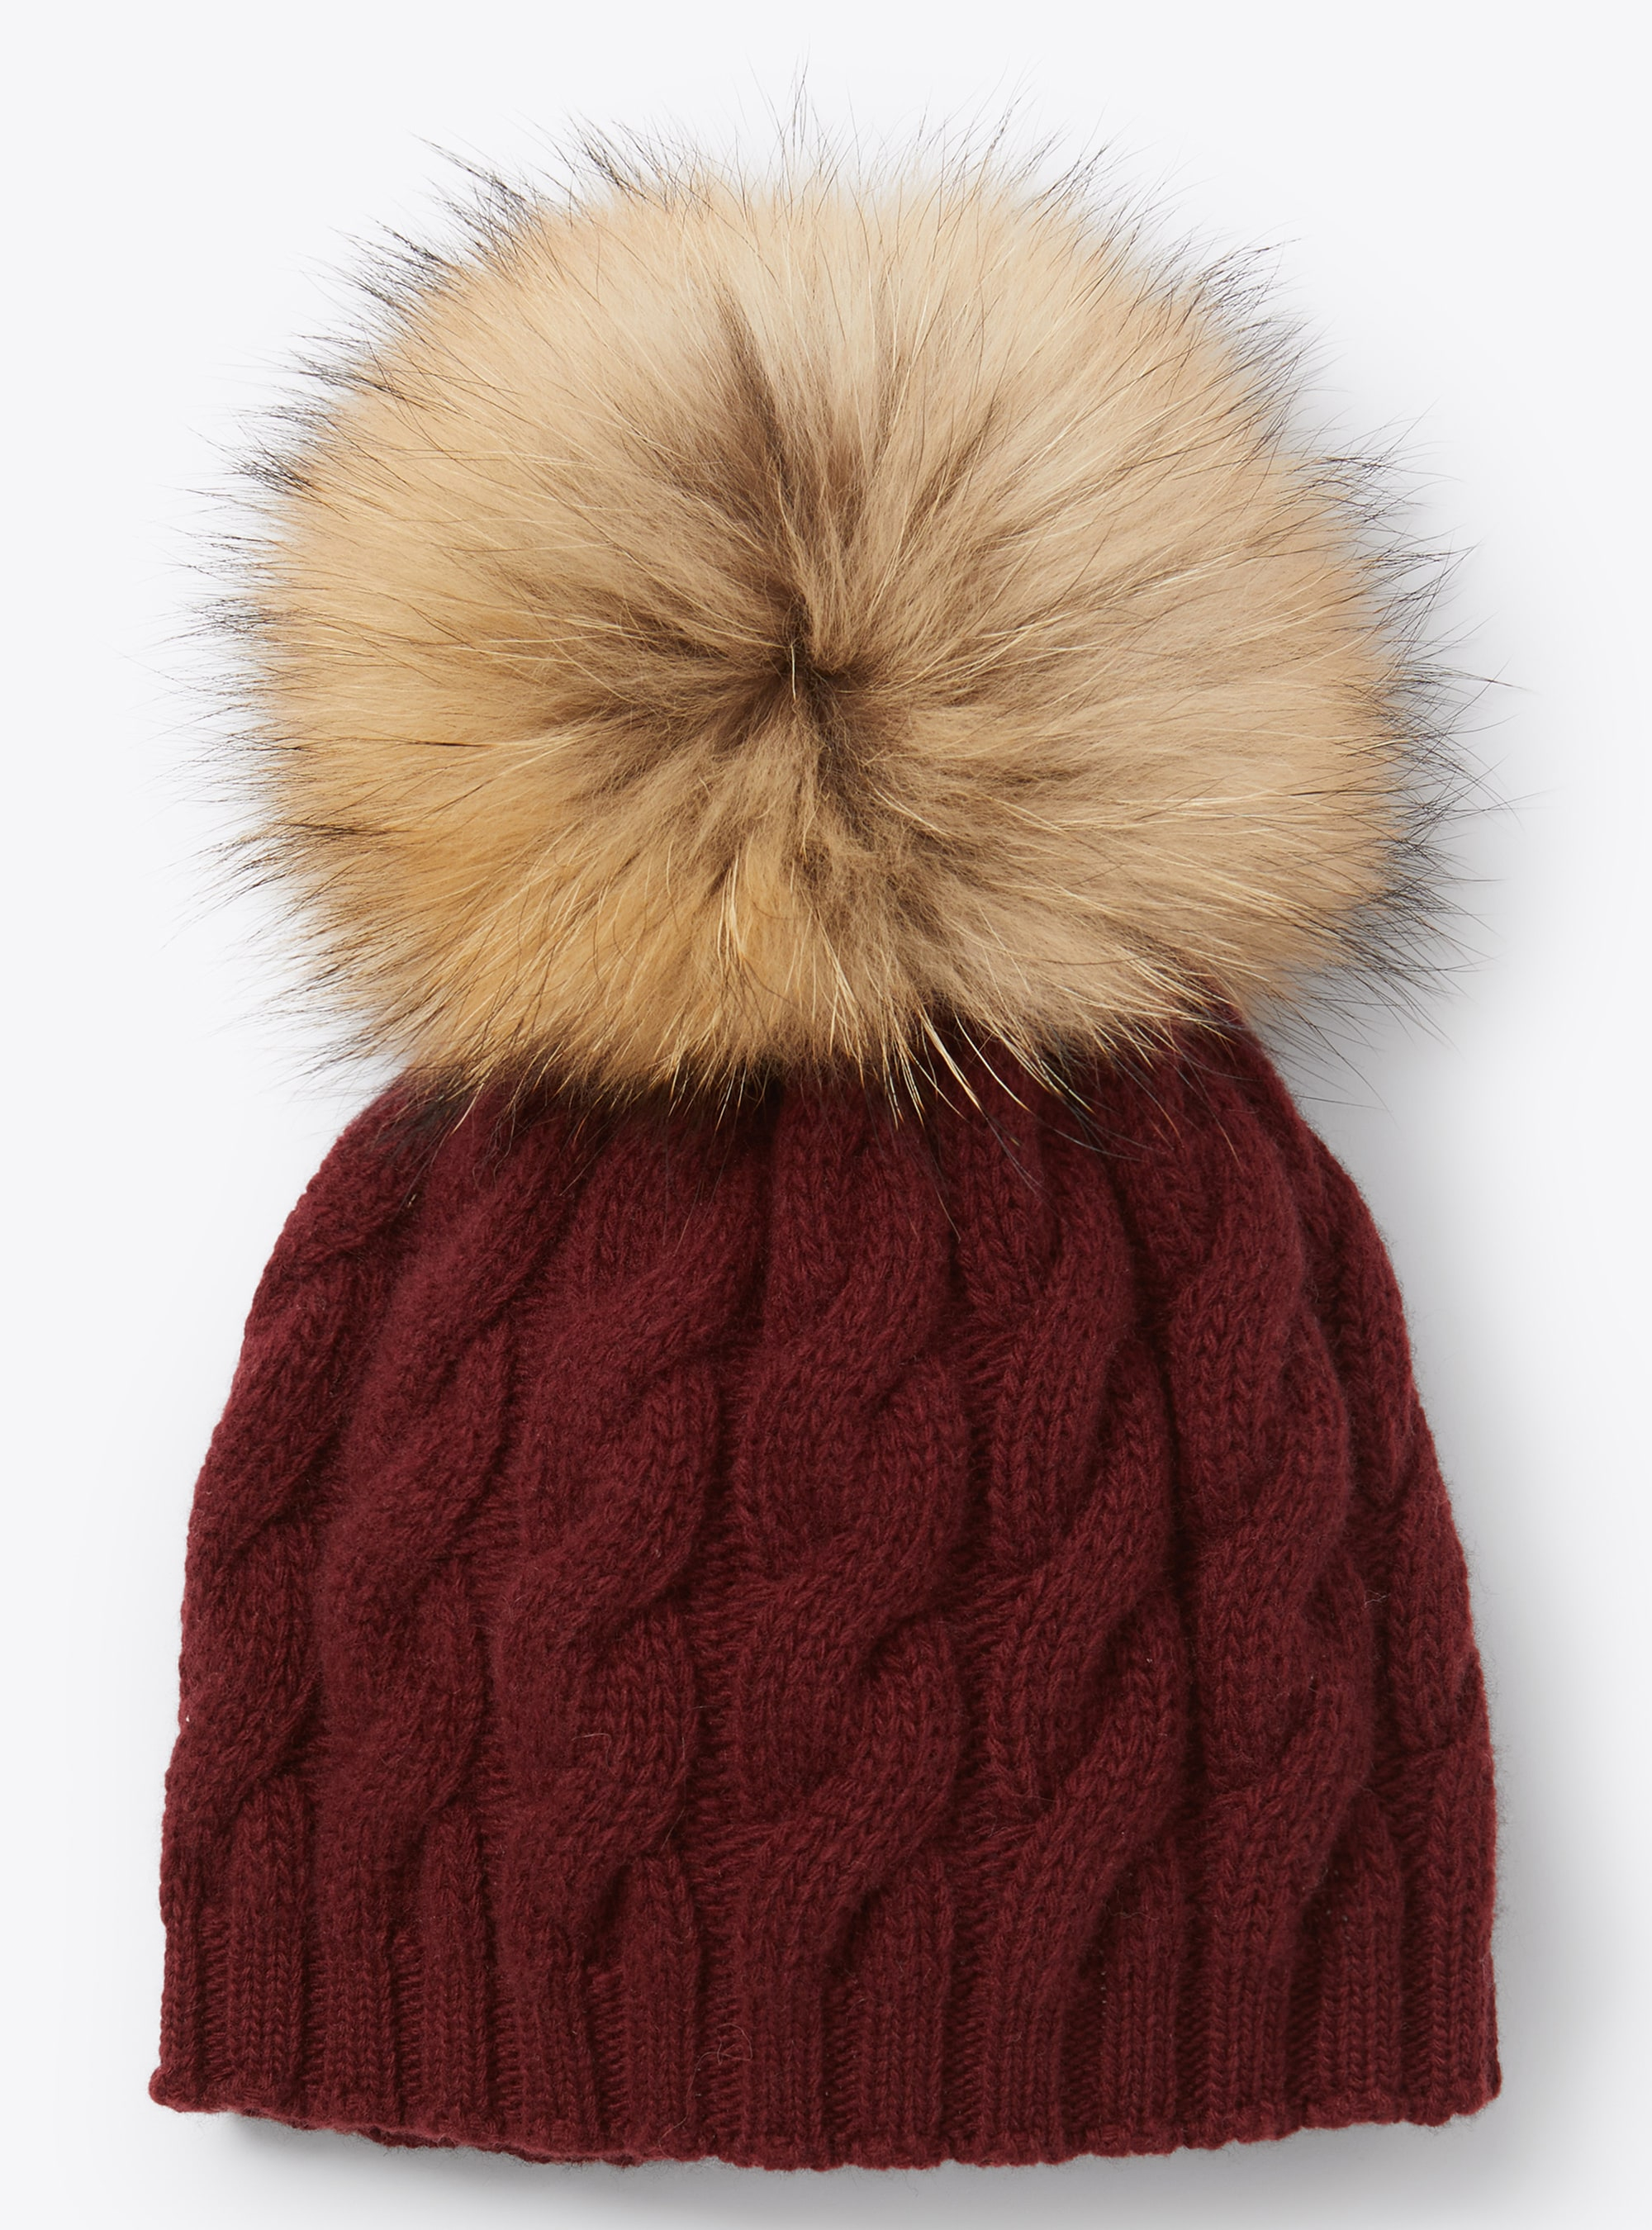 Pompom burgundy knitted hat - Accessories - Il Gufo